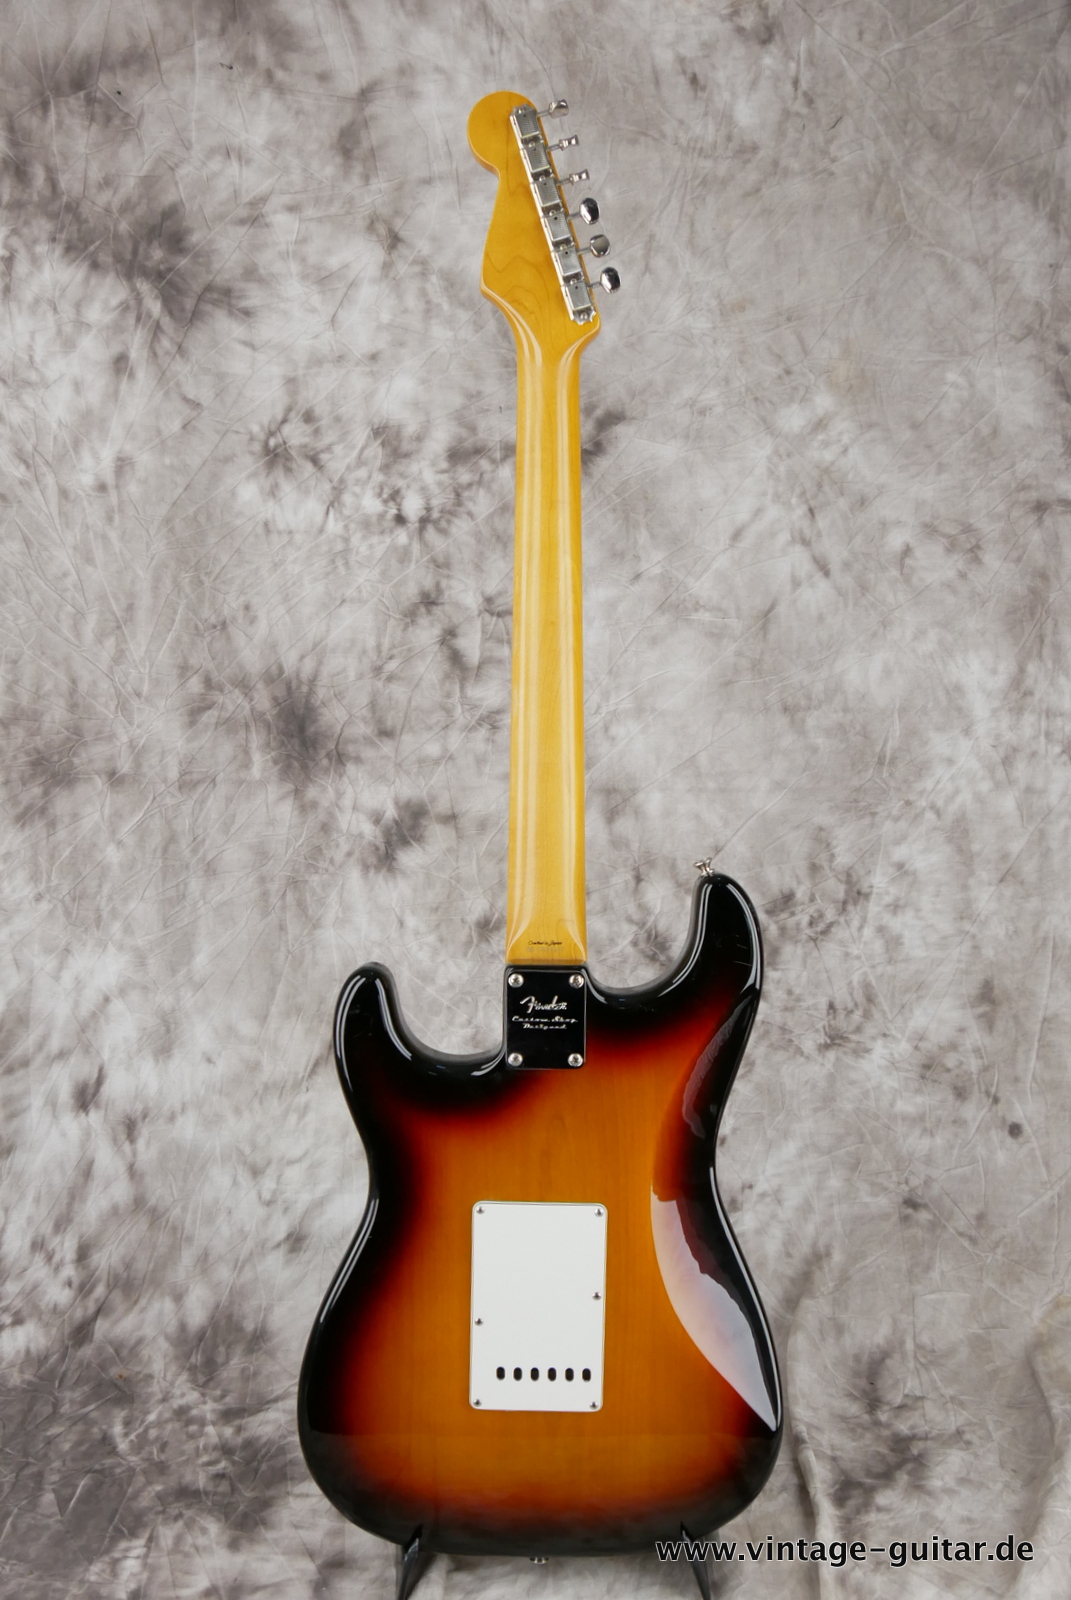 Fender_Stratocaster_crafted_in_Japan_sunburst_two_piont_tromolo_3,76kg-002.JPG